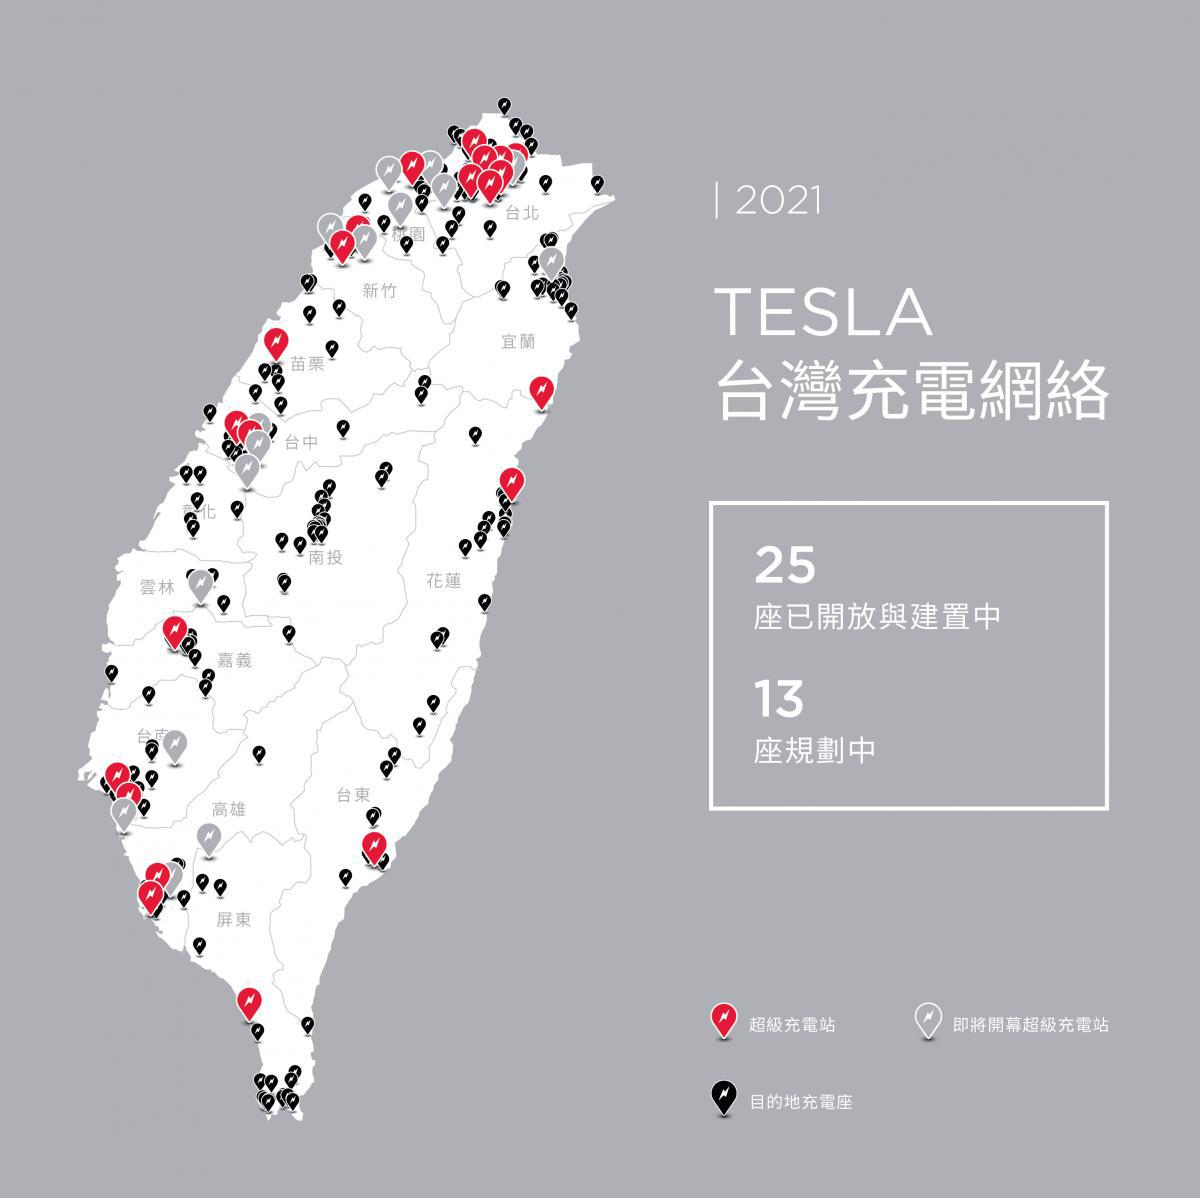 Tesla 增加充电站